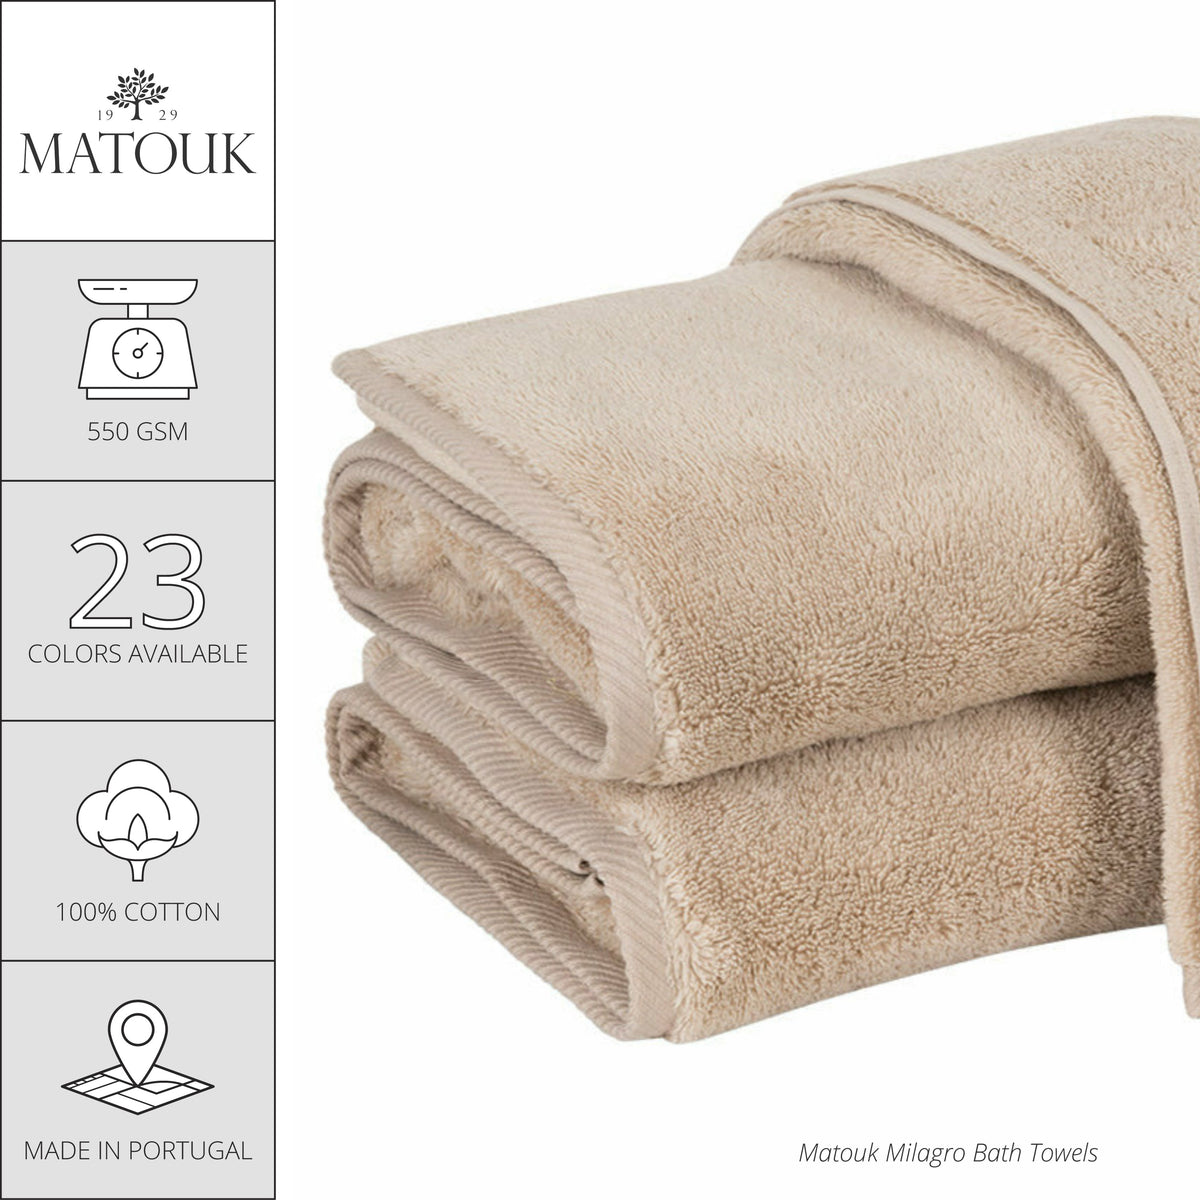 Matouk Milagro Bath Towels and Mats - Linen